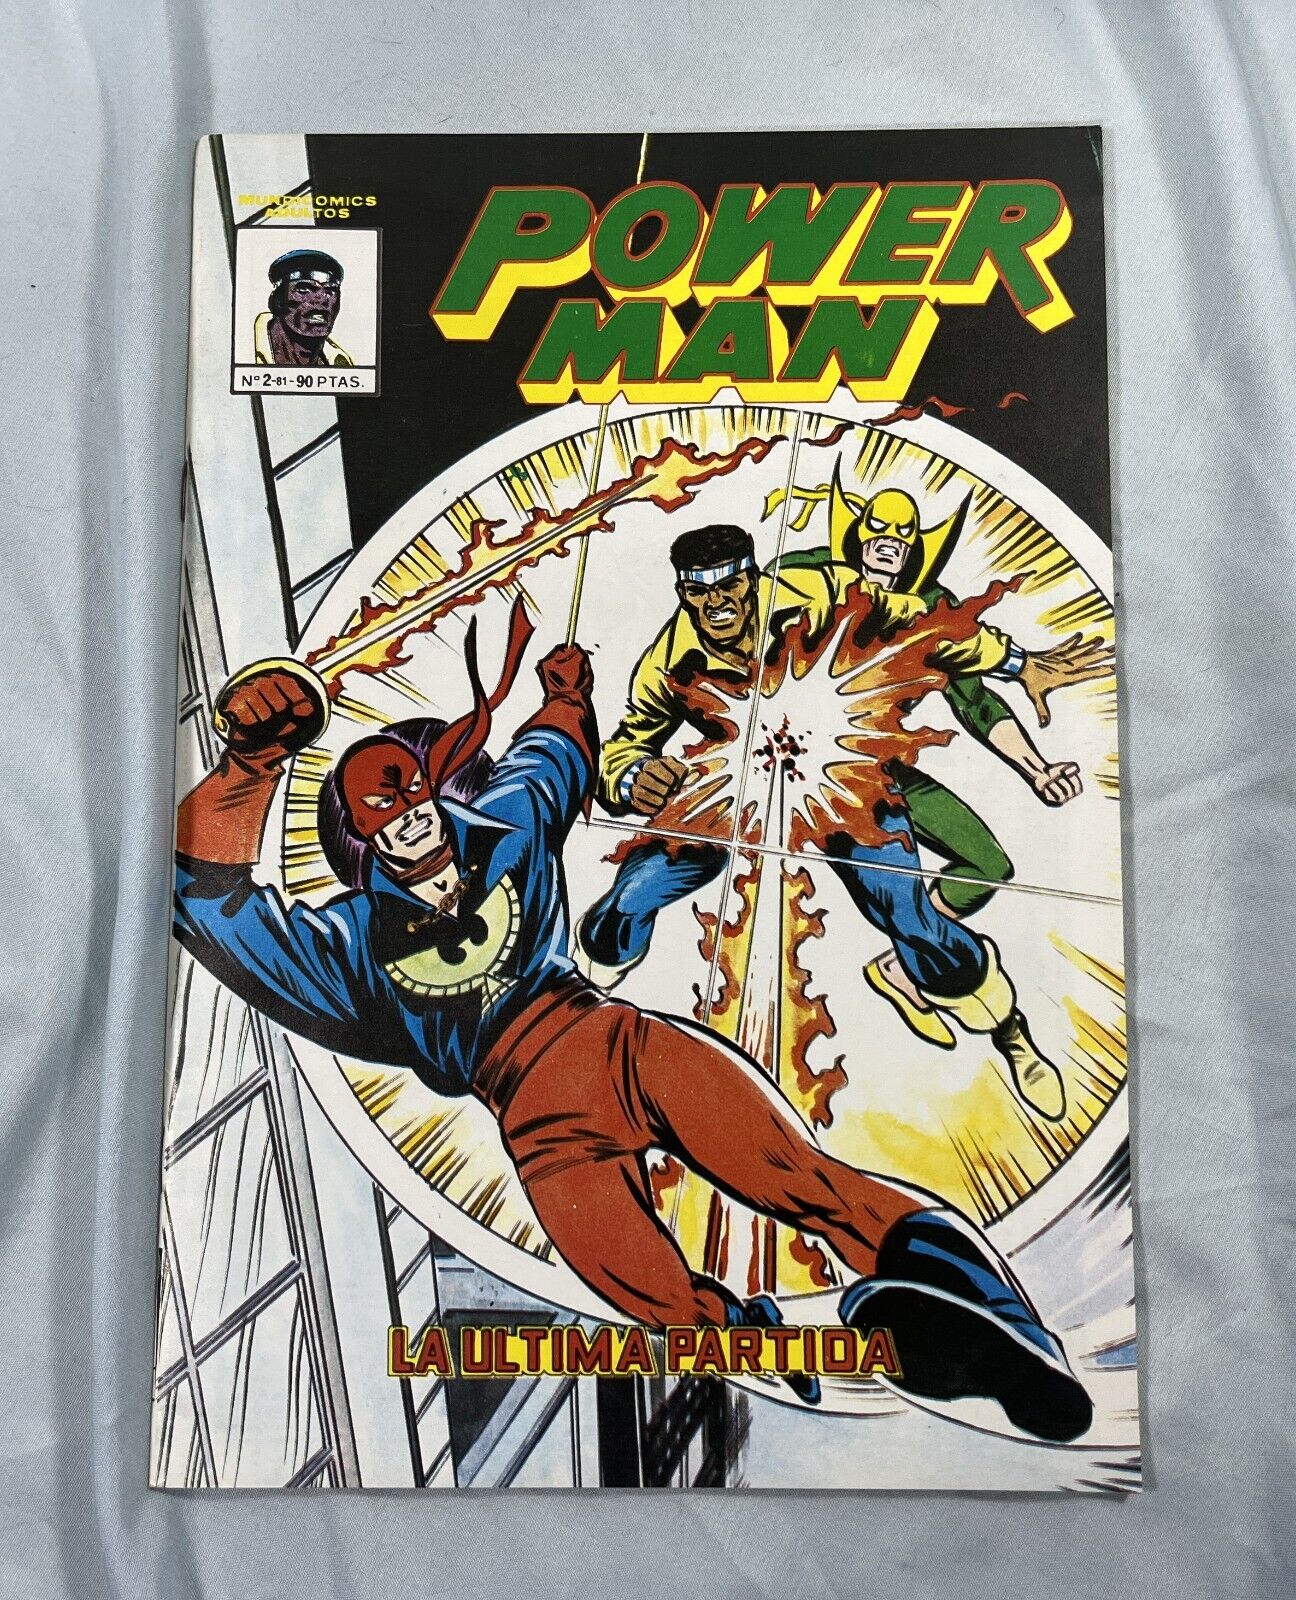 Power Man # 2 - La Ultima Partida - Spanish Edition Comic Book - 1981